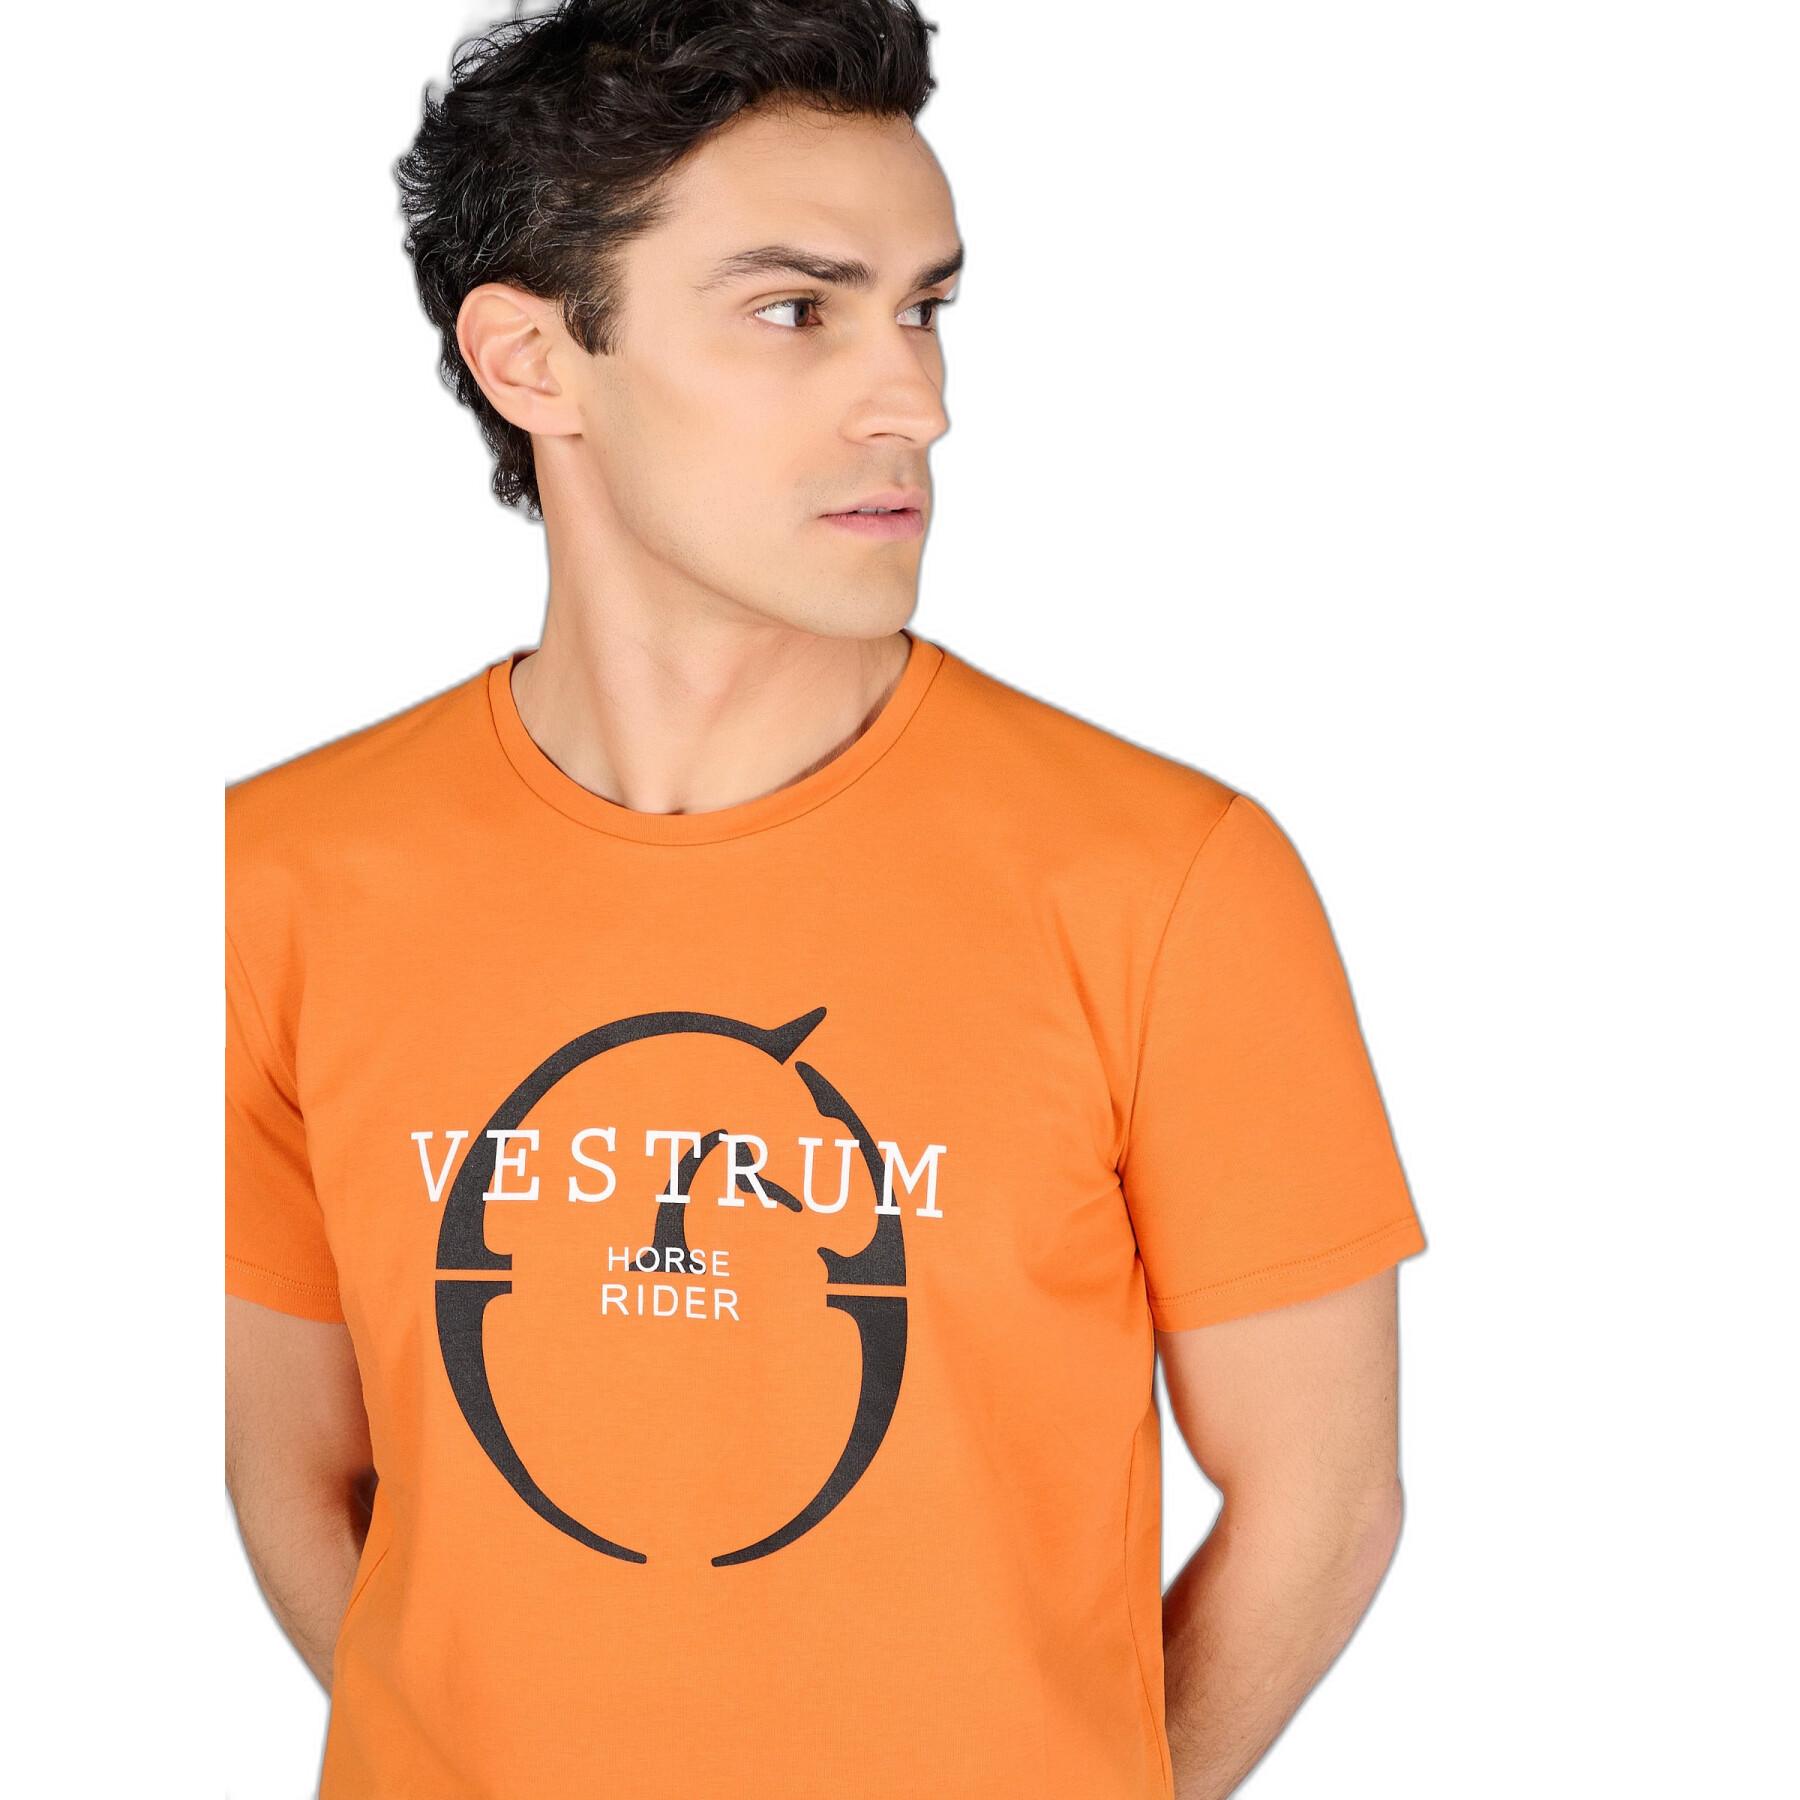 T-Shirt Vestrum